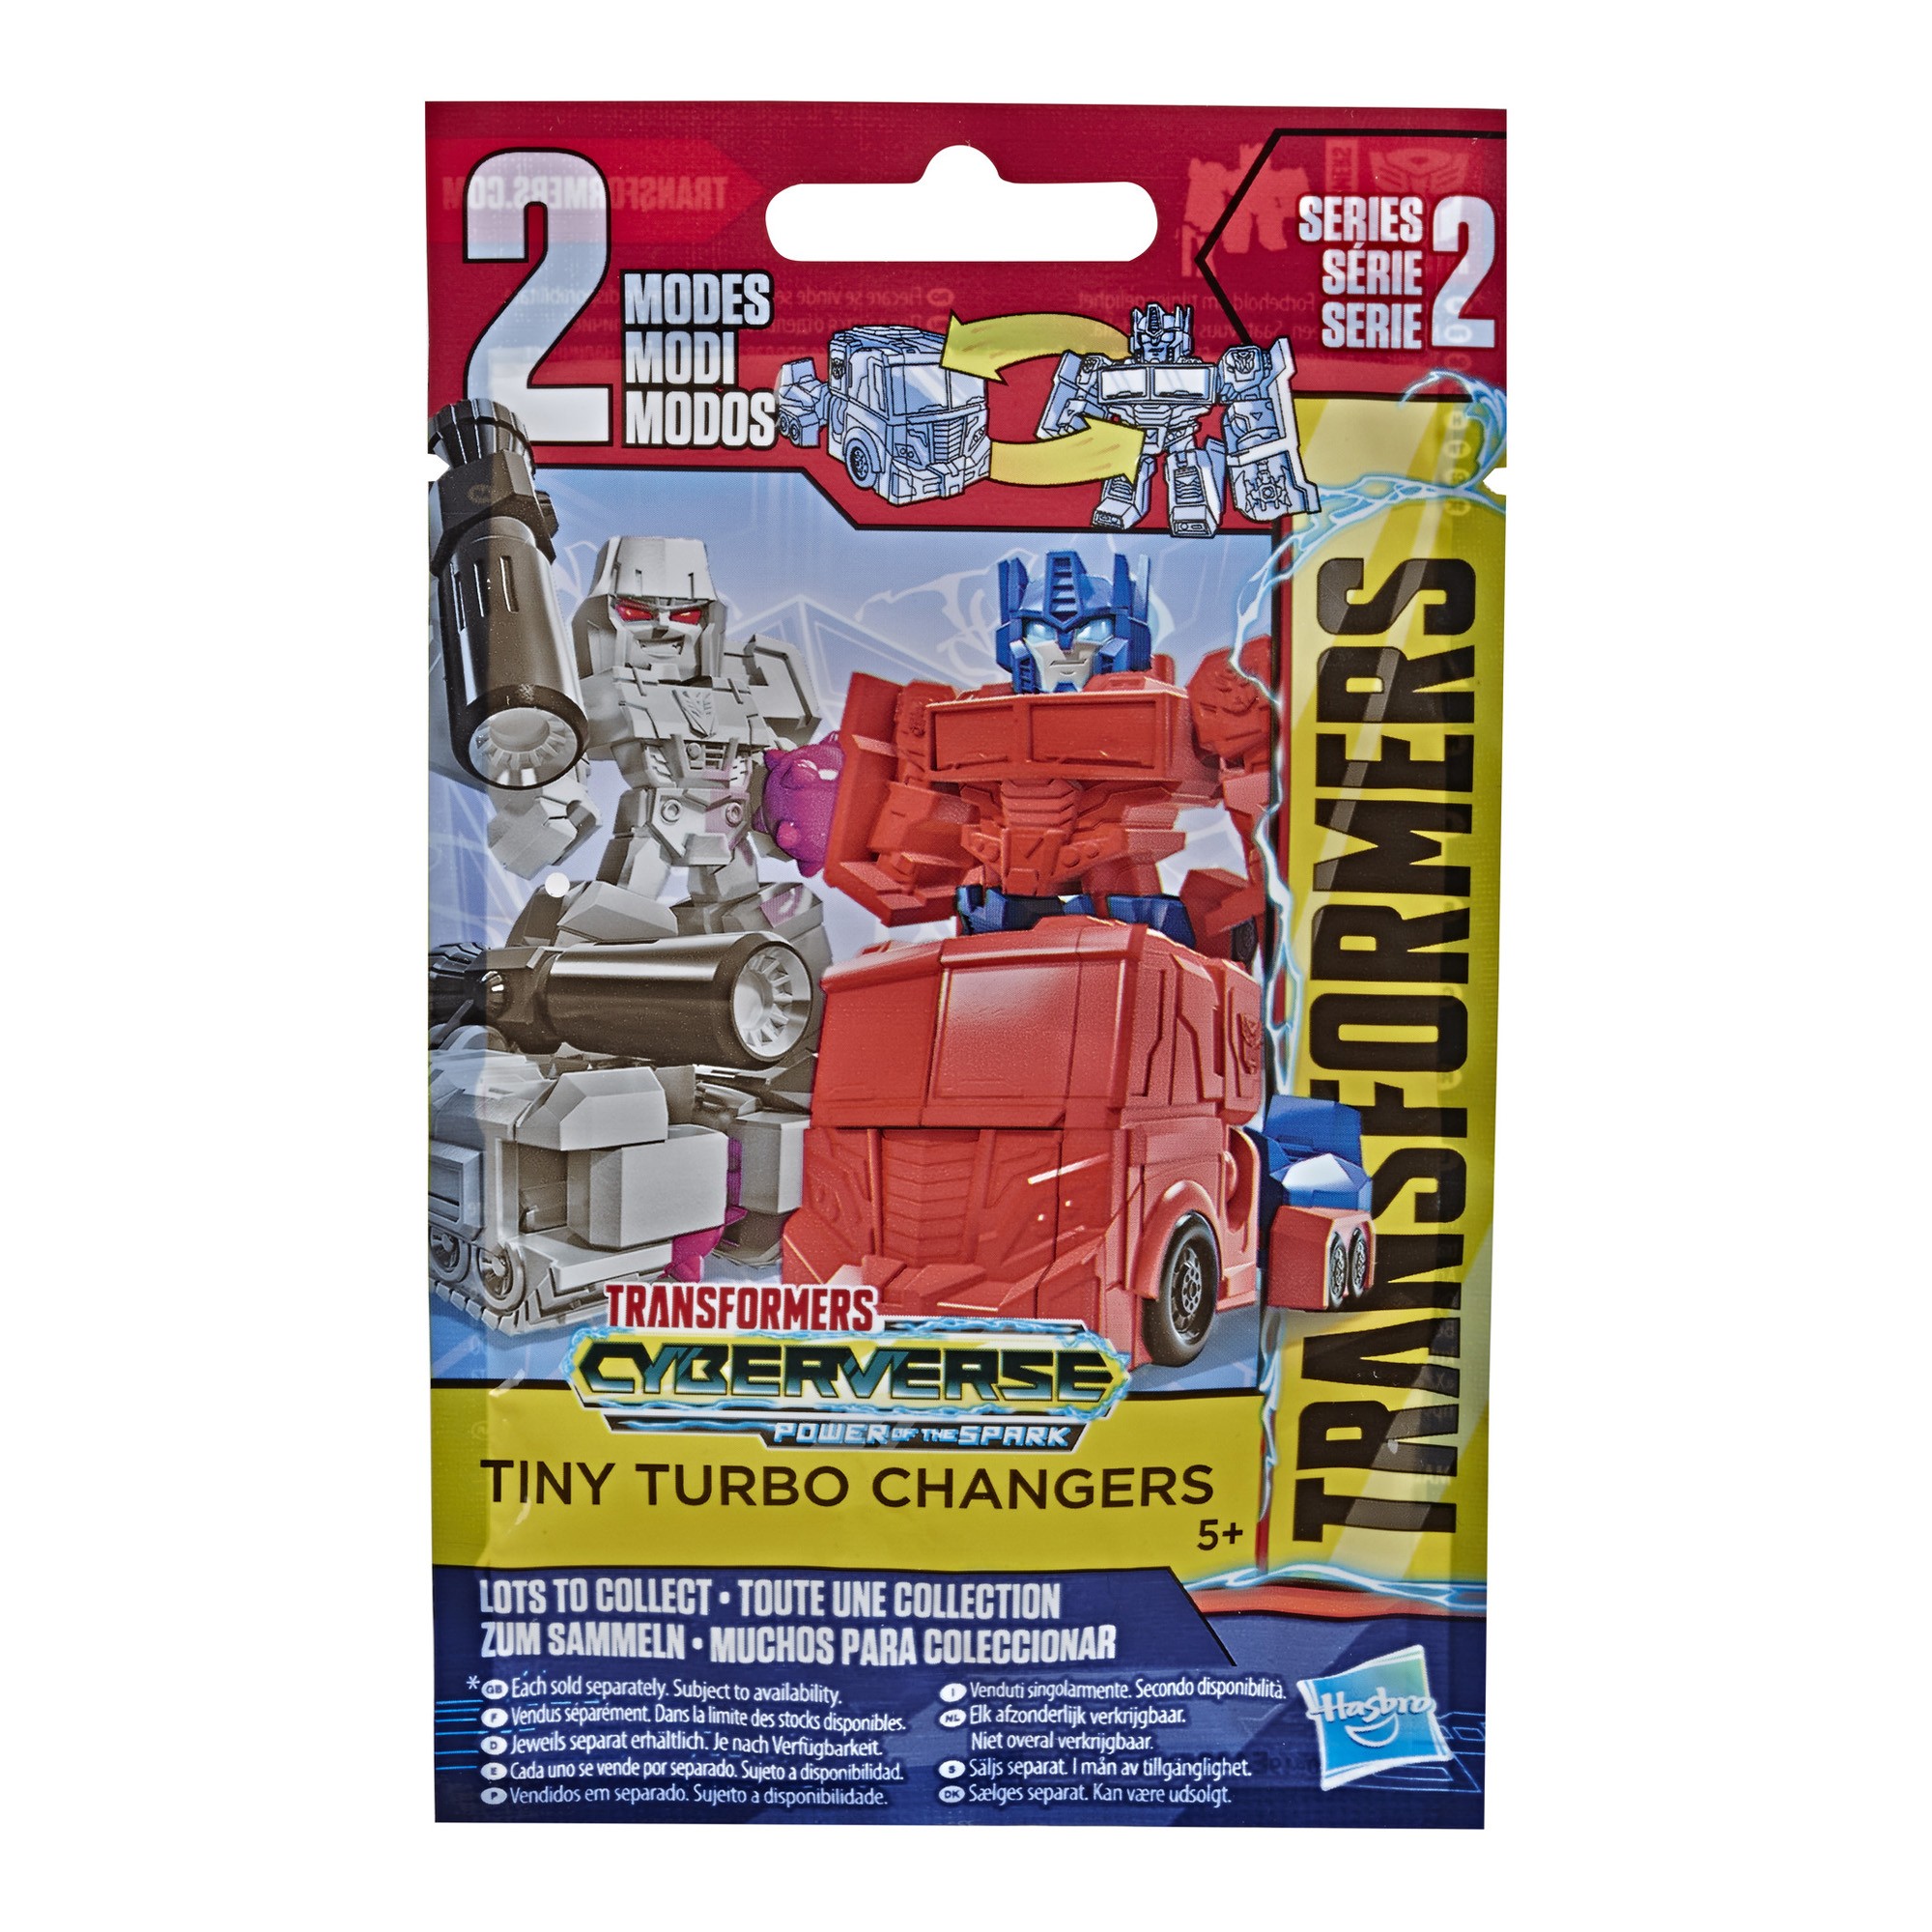 JAZZ Transformers Cyberverse Tiny Turbo Changers Series 2 2019 Hasbro New